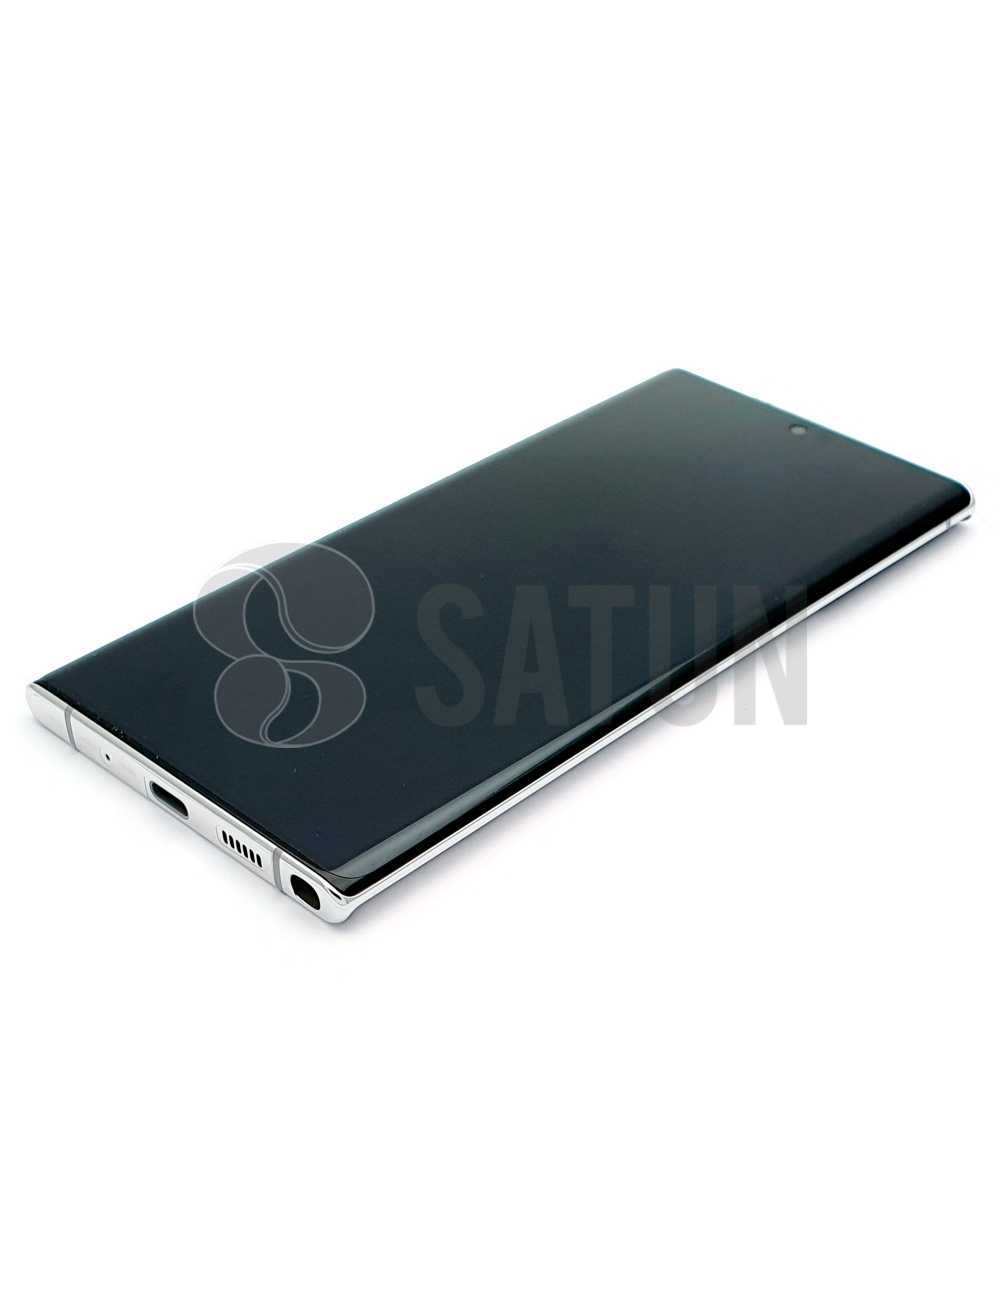 Pantalla Samsung Galaxy Note 10 plus blanco